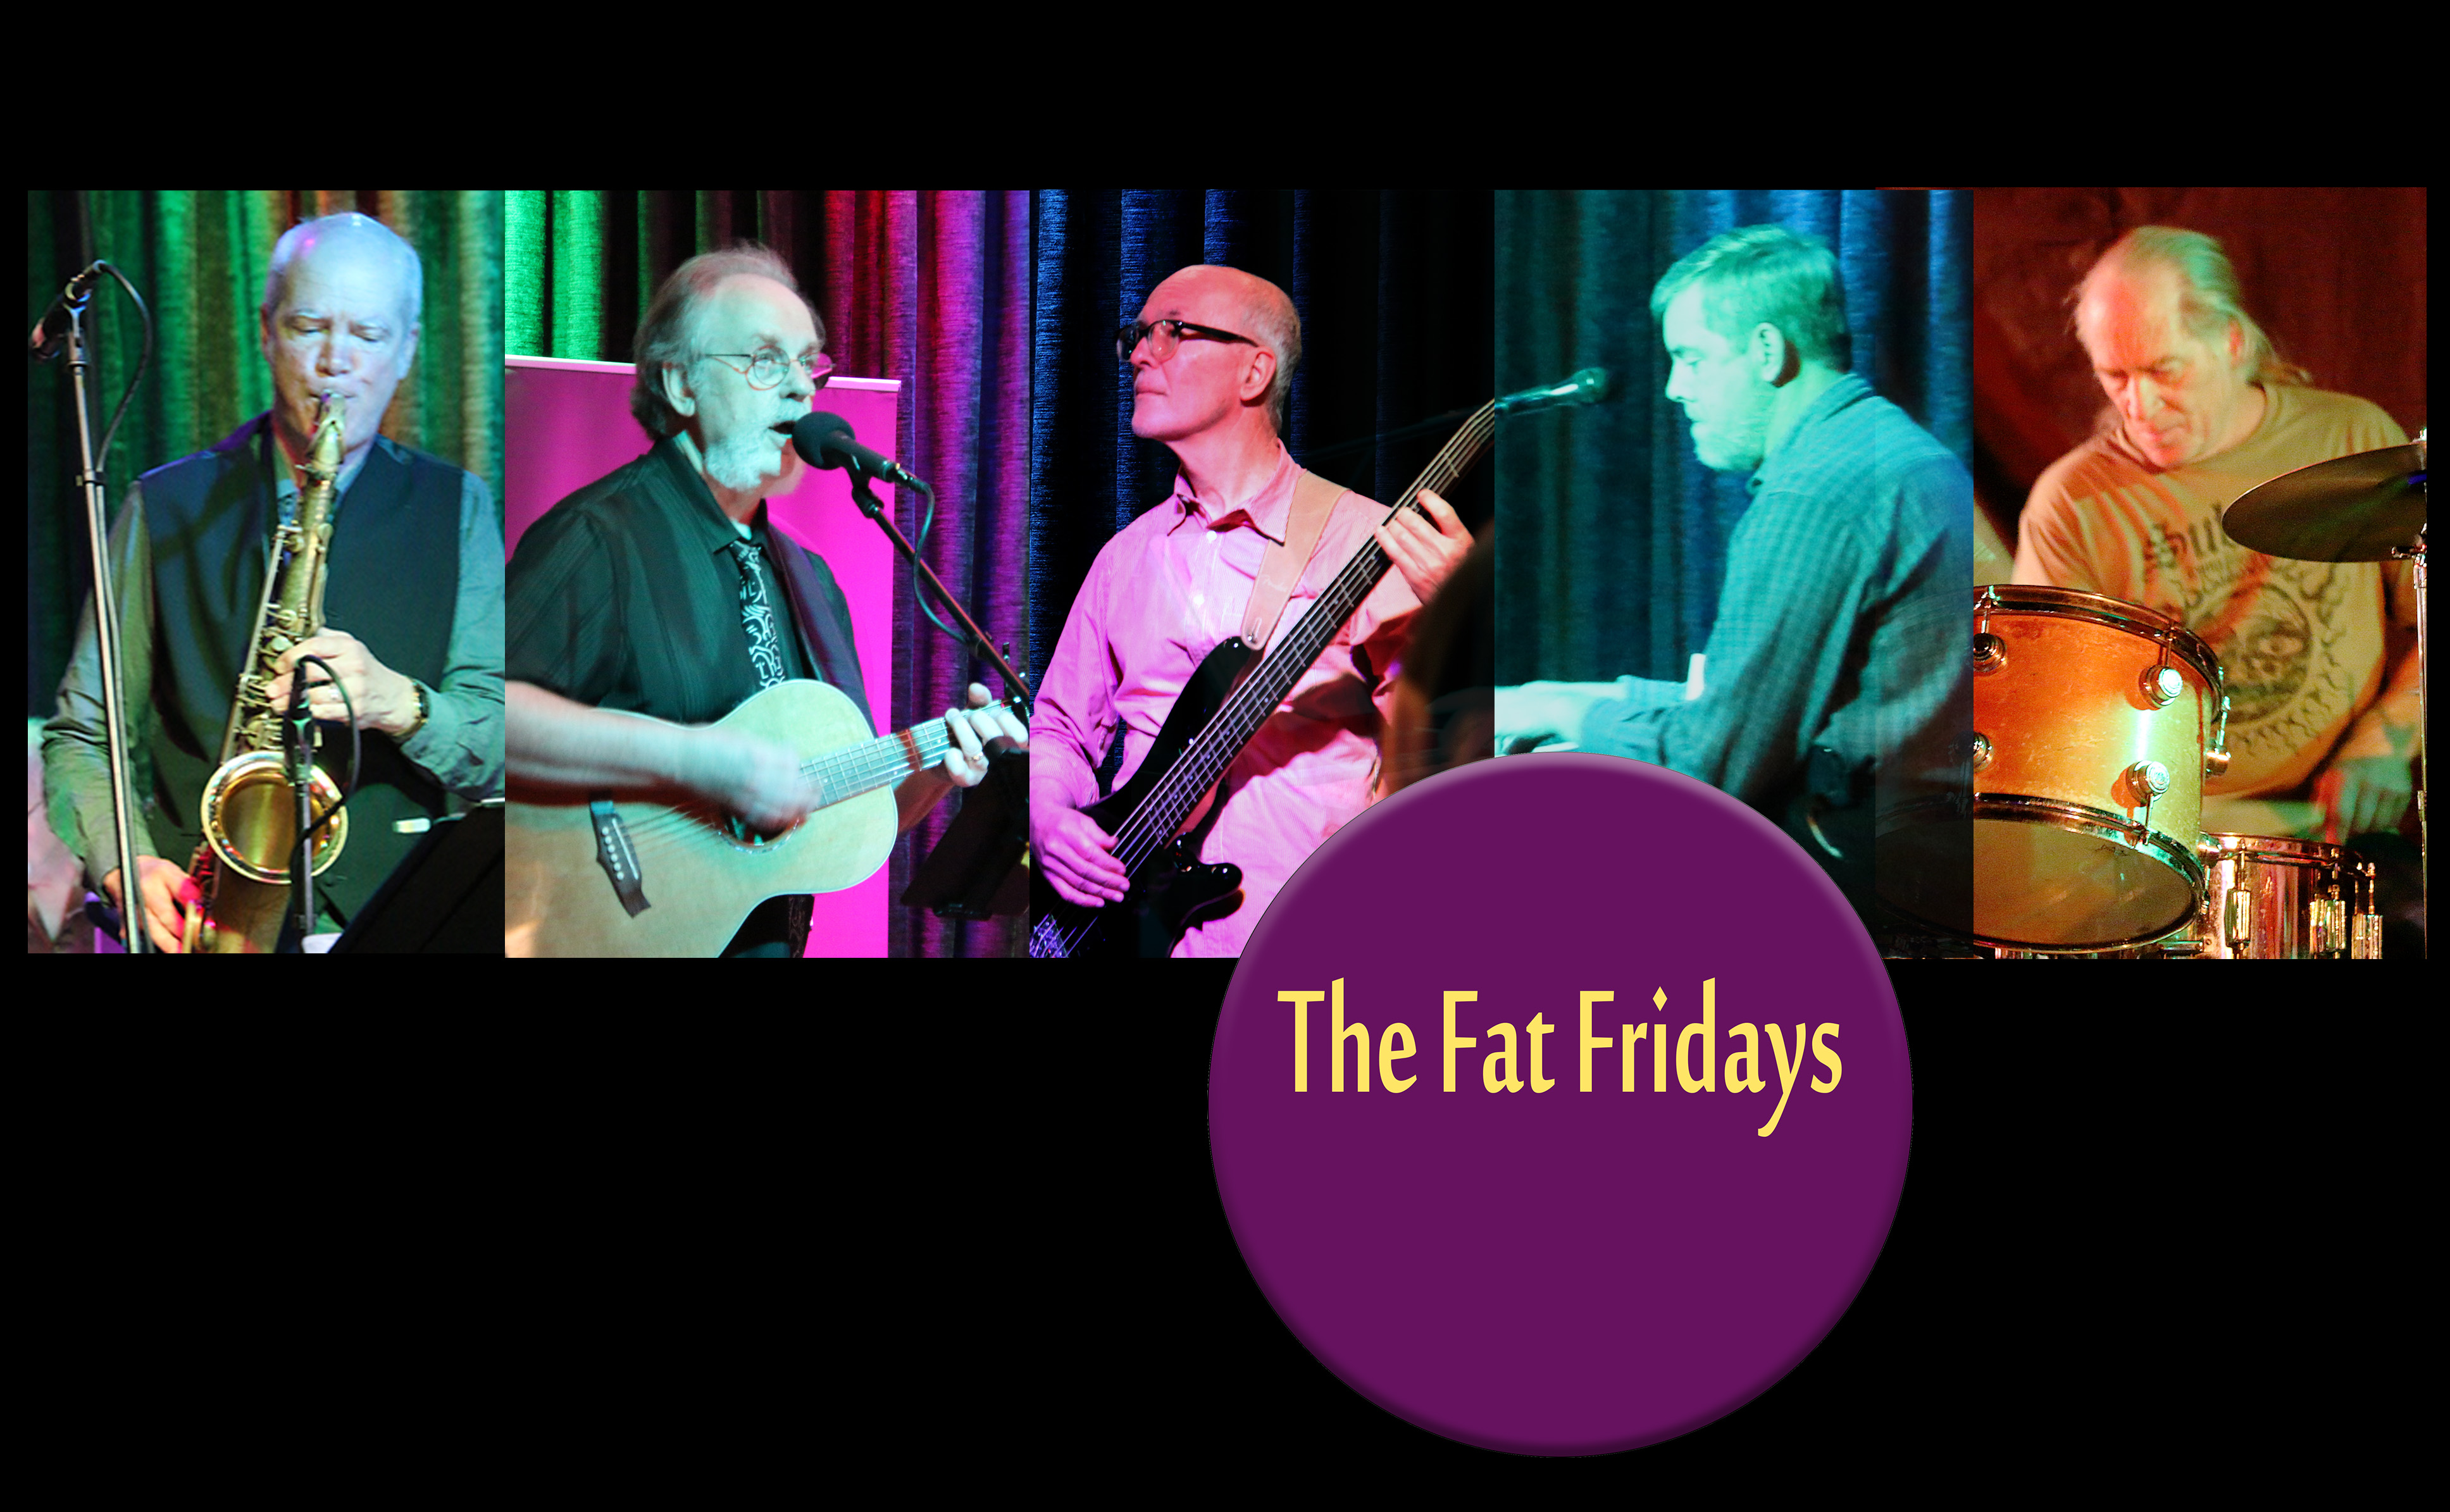 The Fat Fridays 5.0